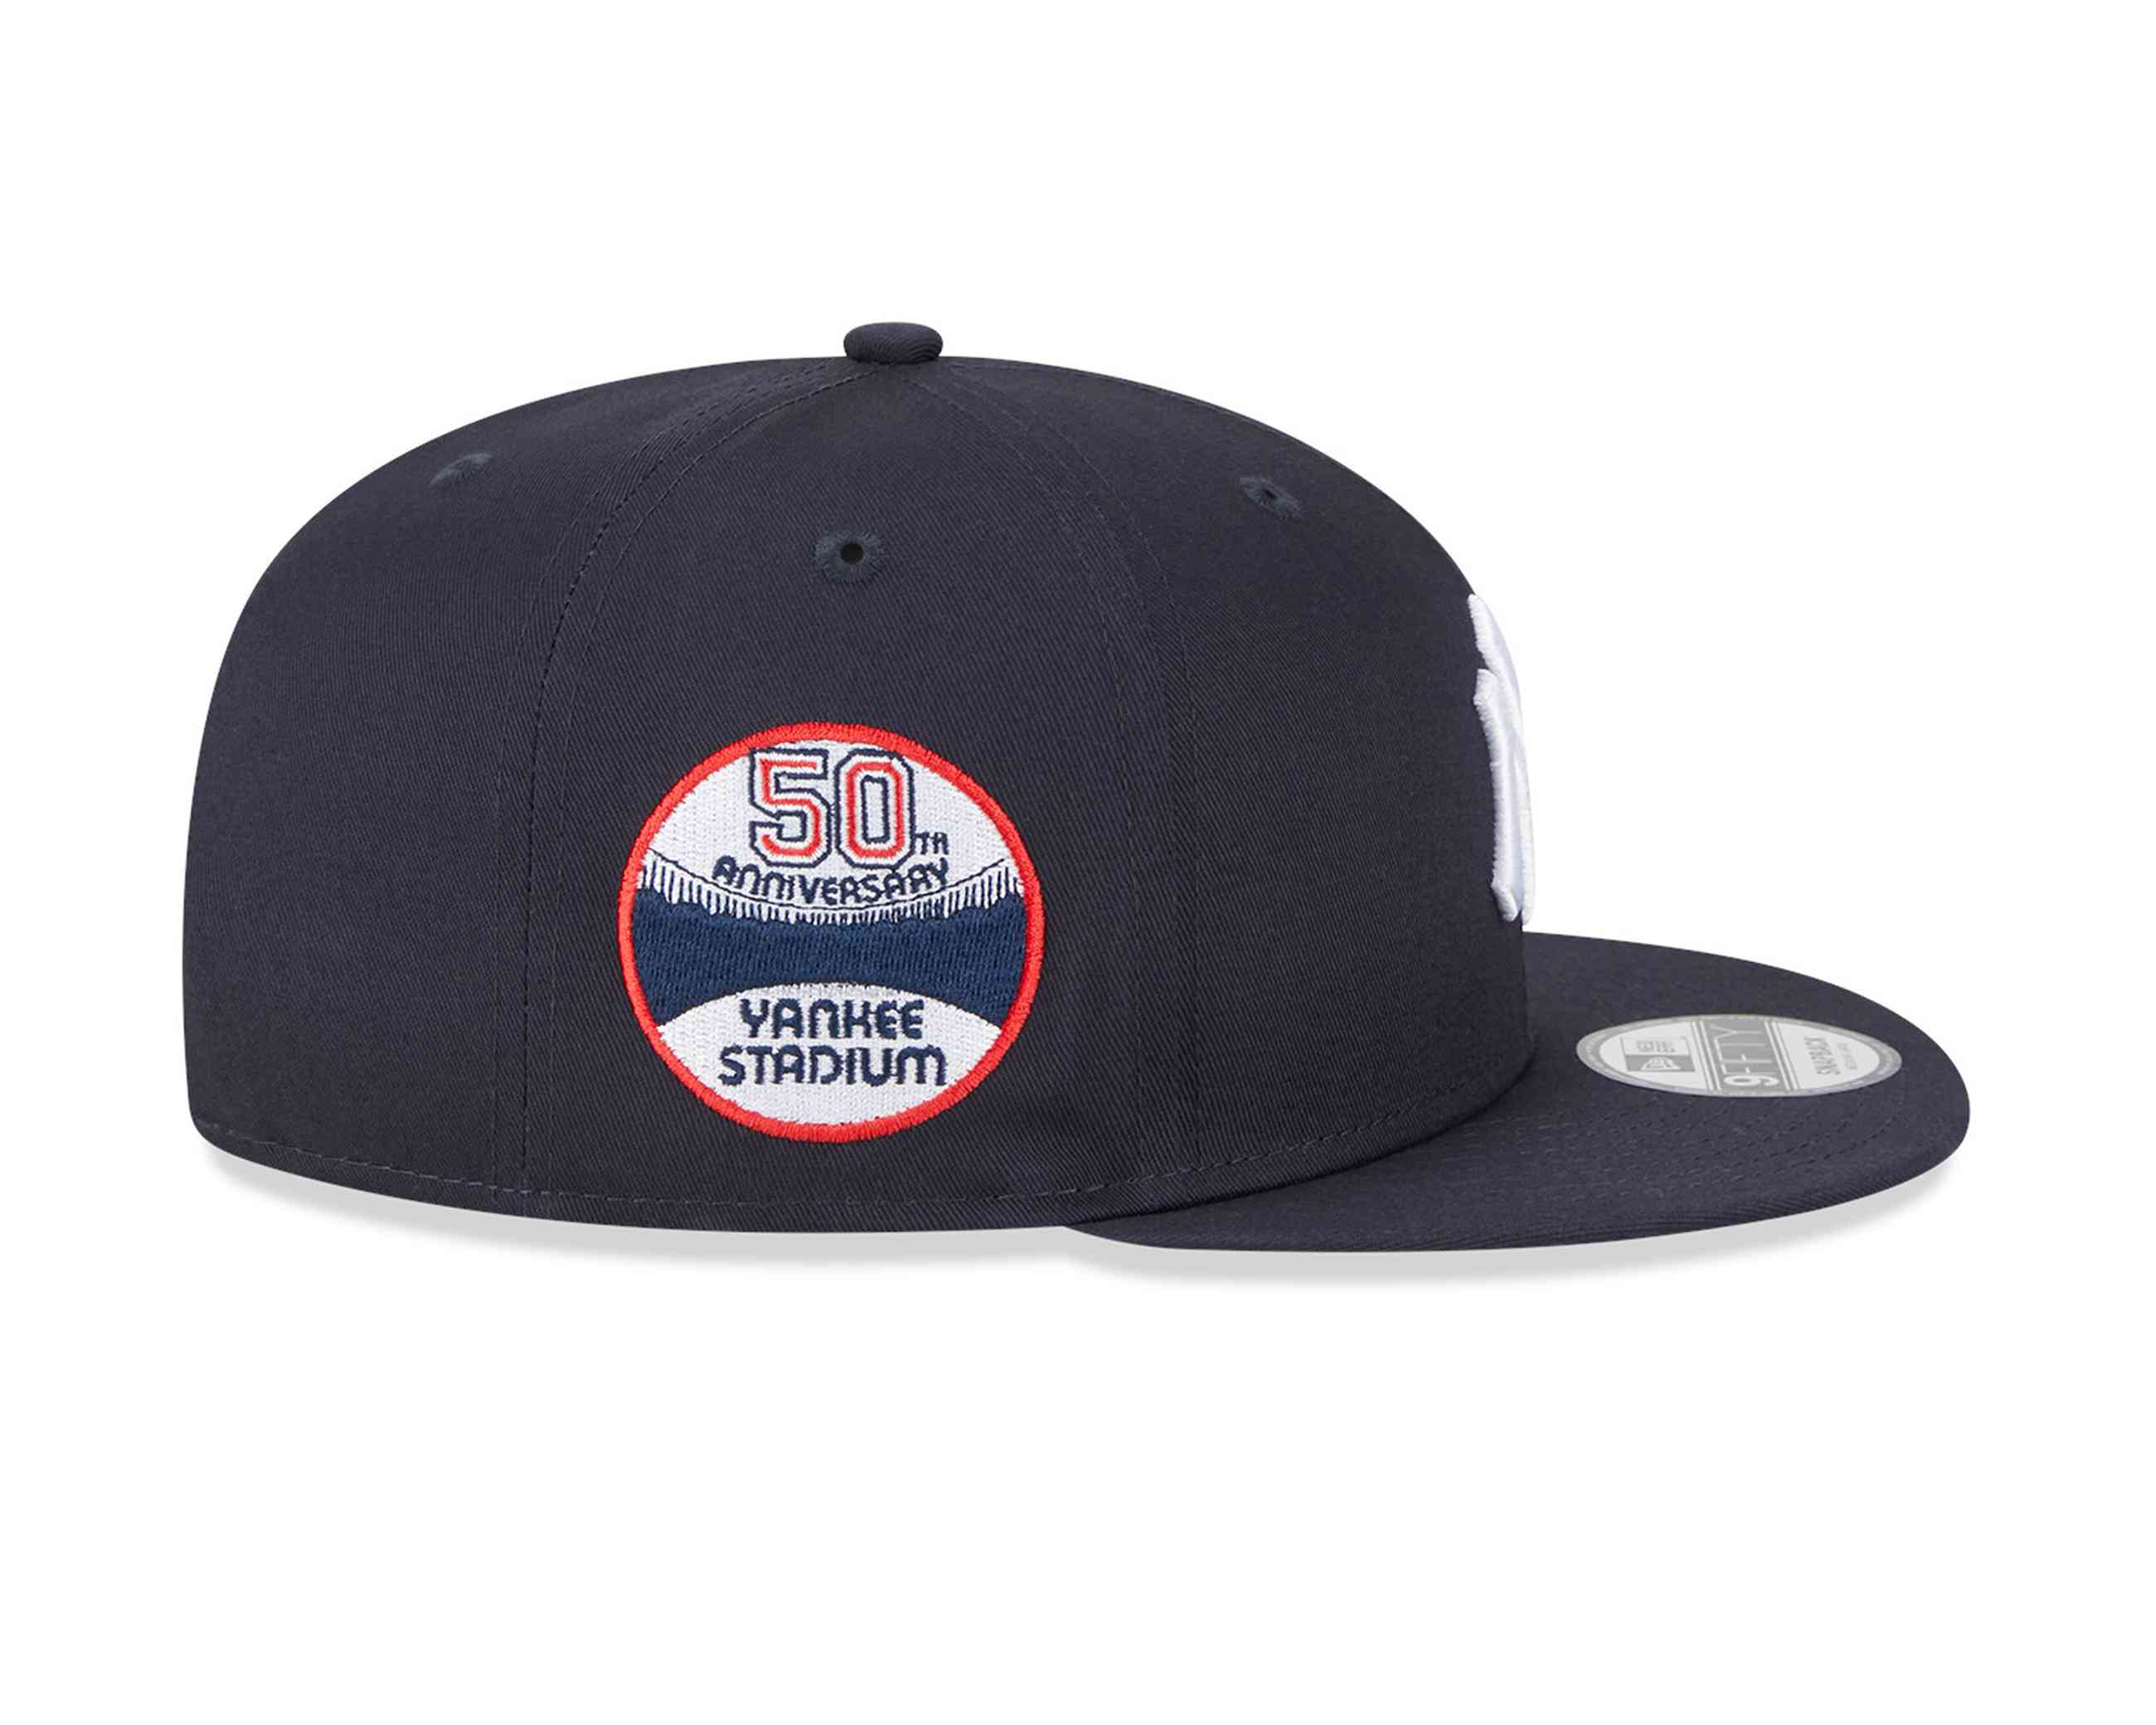 New Era - MLB New York Yankees New Traditions 9Fifty Snapback Cap